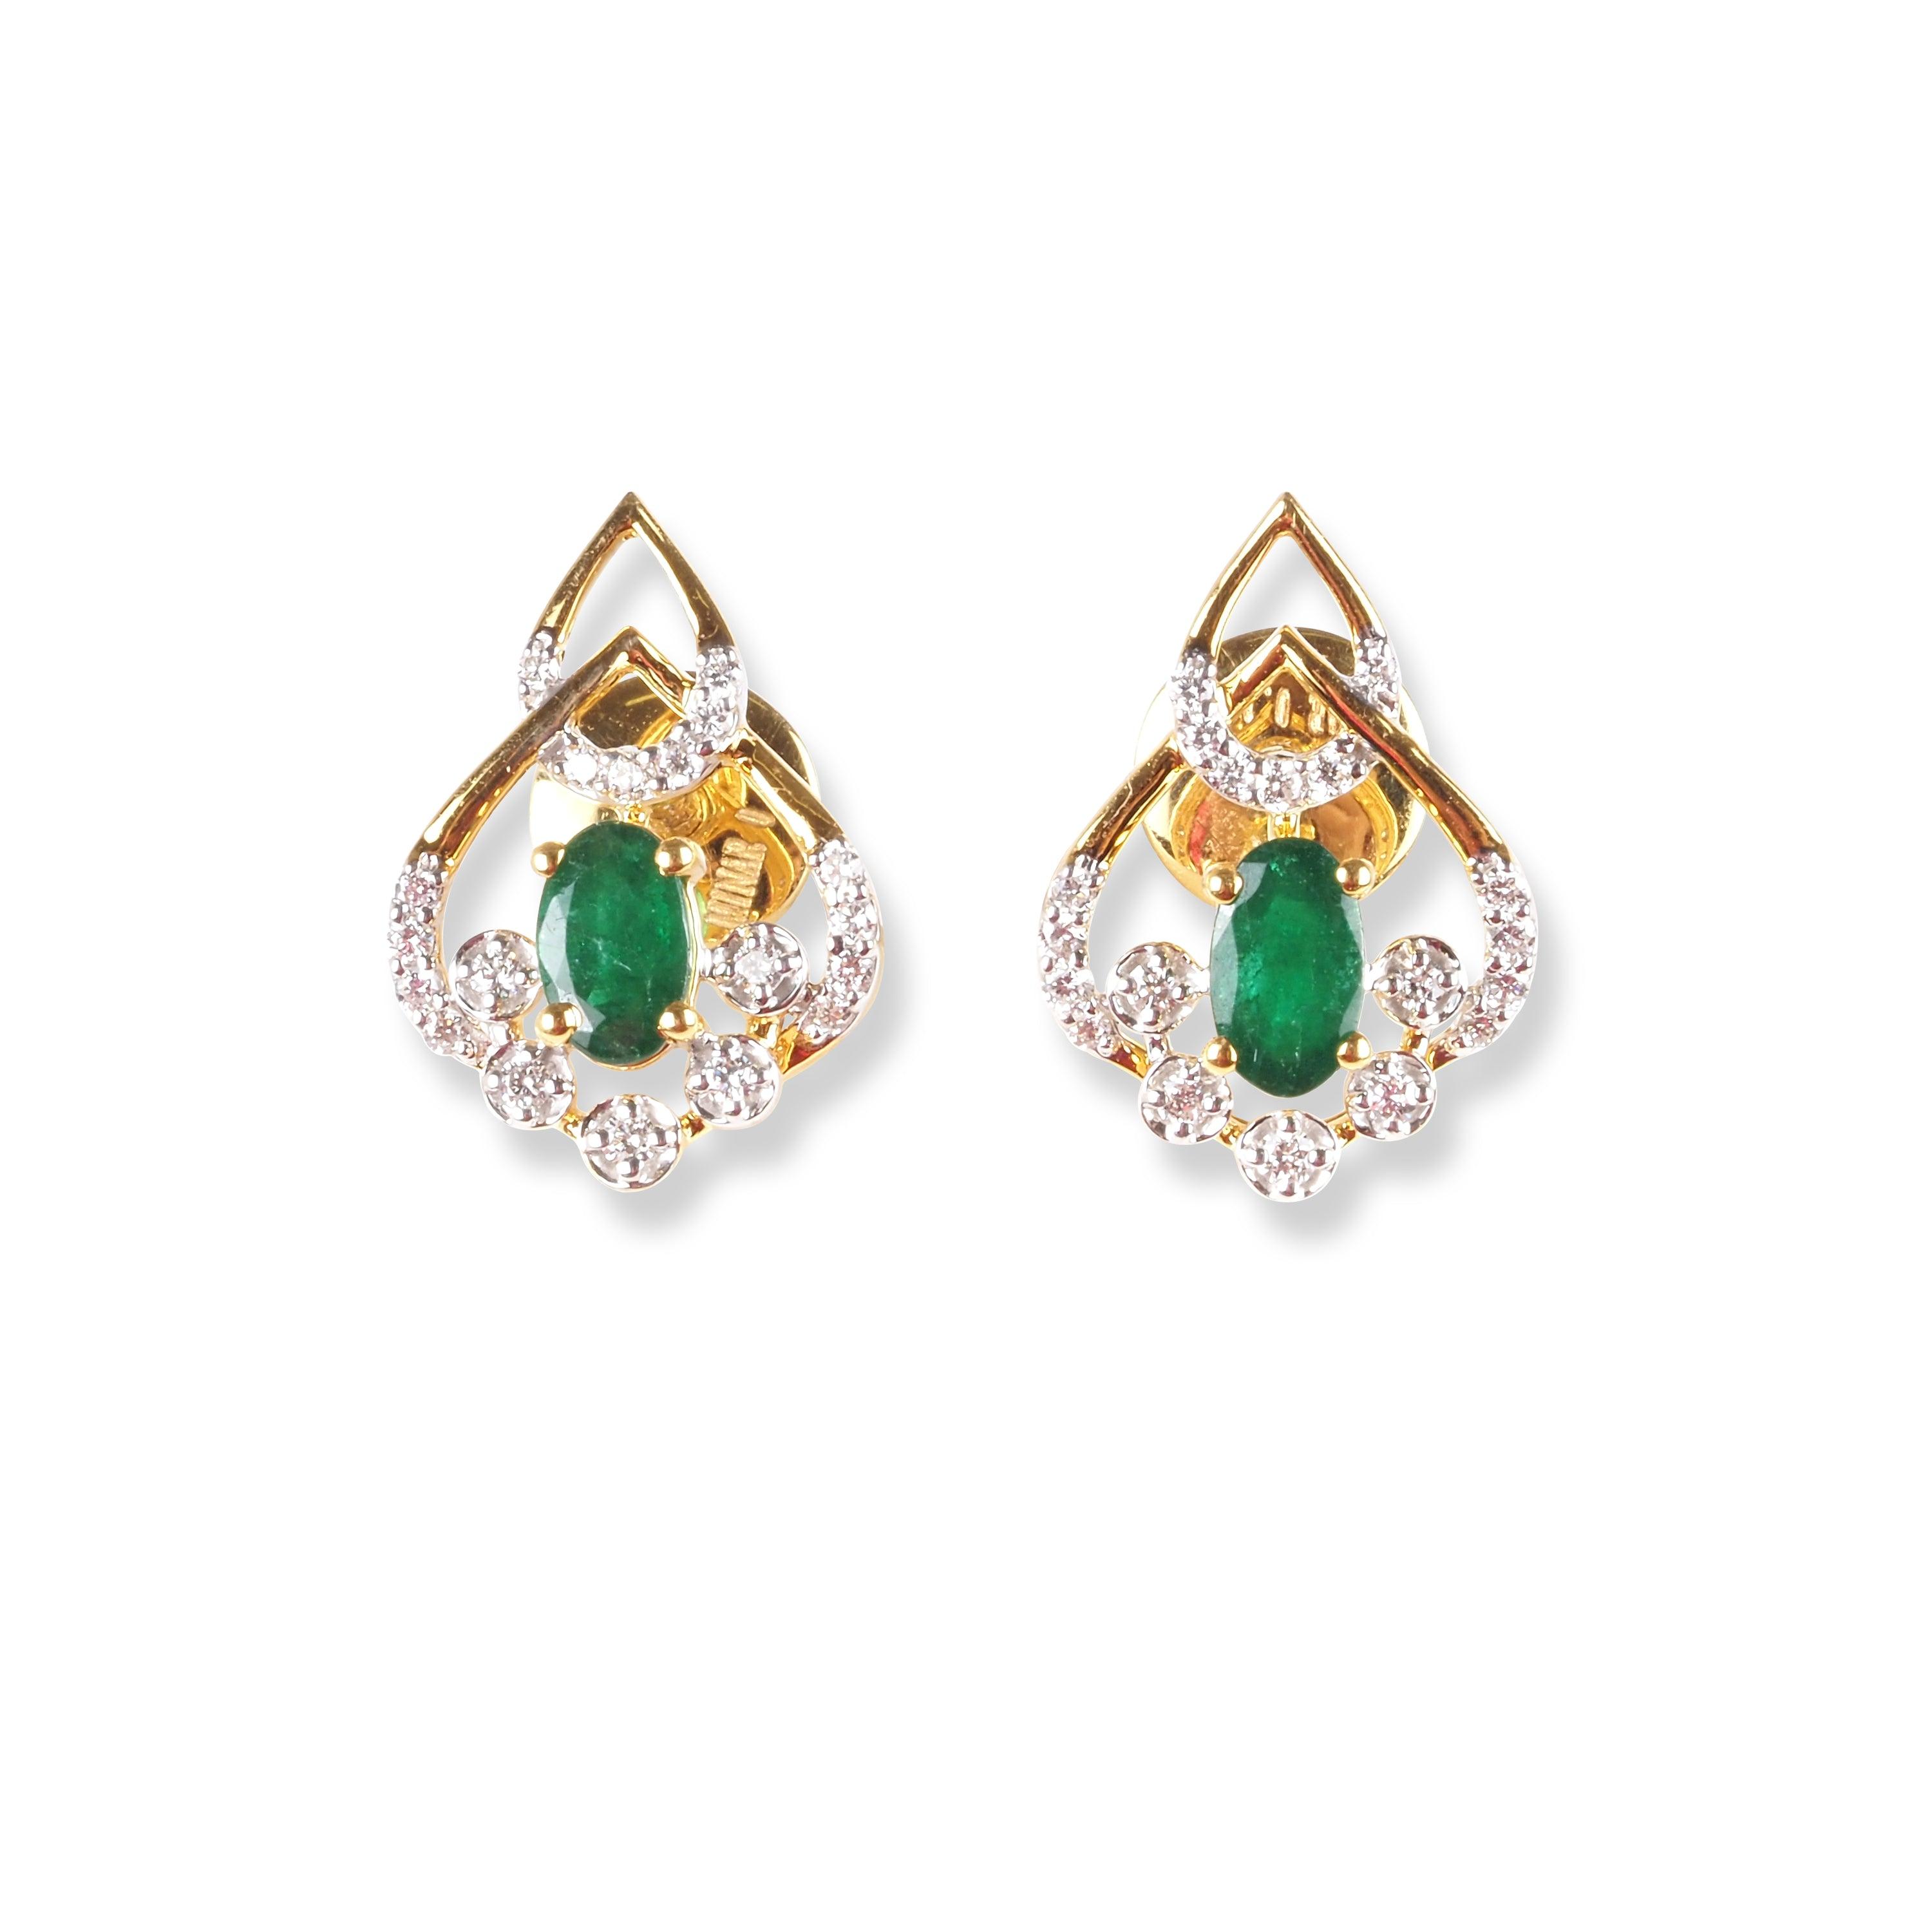 18ct Yellow Gold Diamond & Emerald Set (Pendant + Chain + Earrings) MCS6243/4 - Minar Jewellers